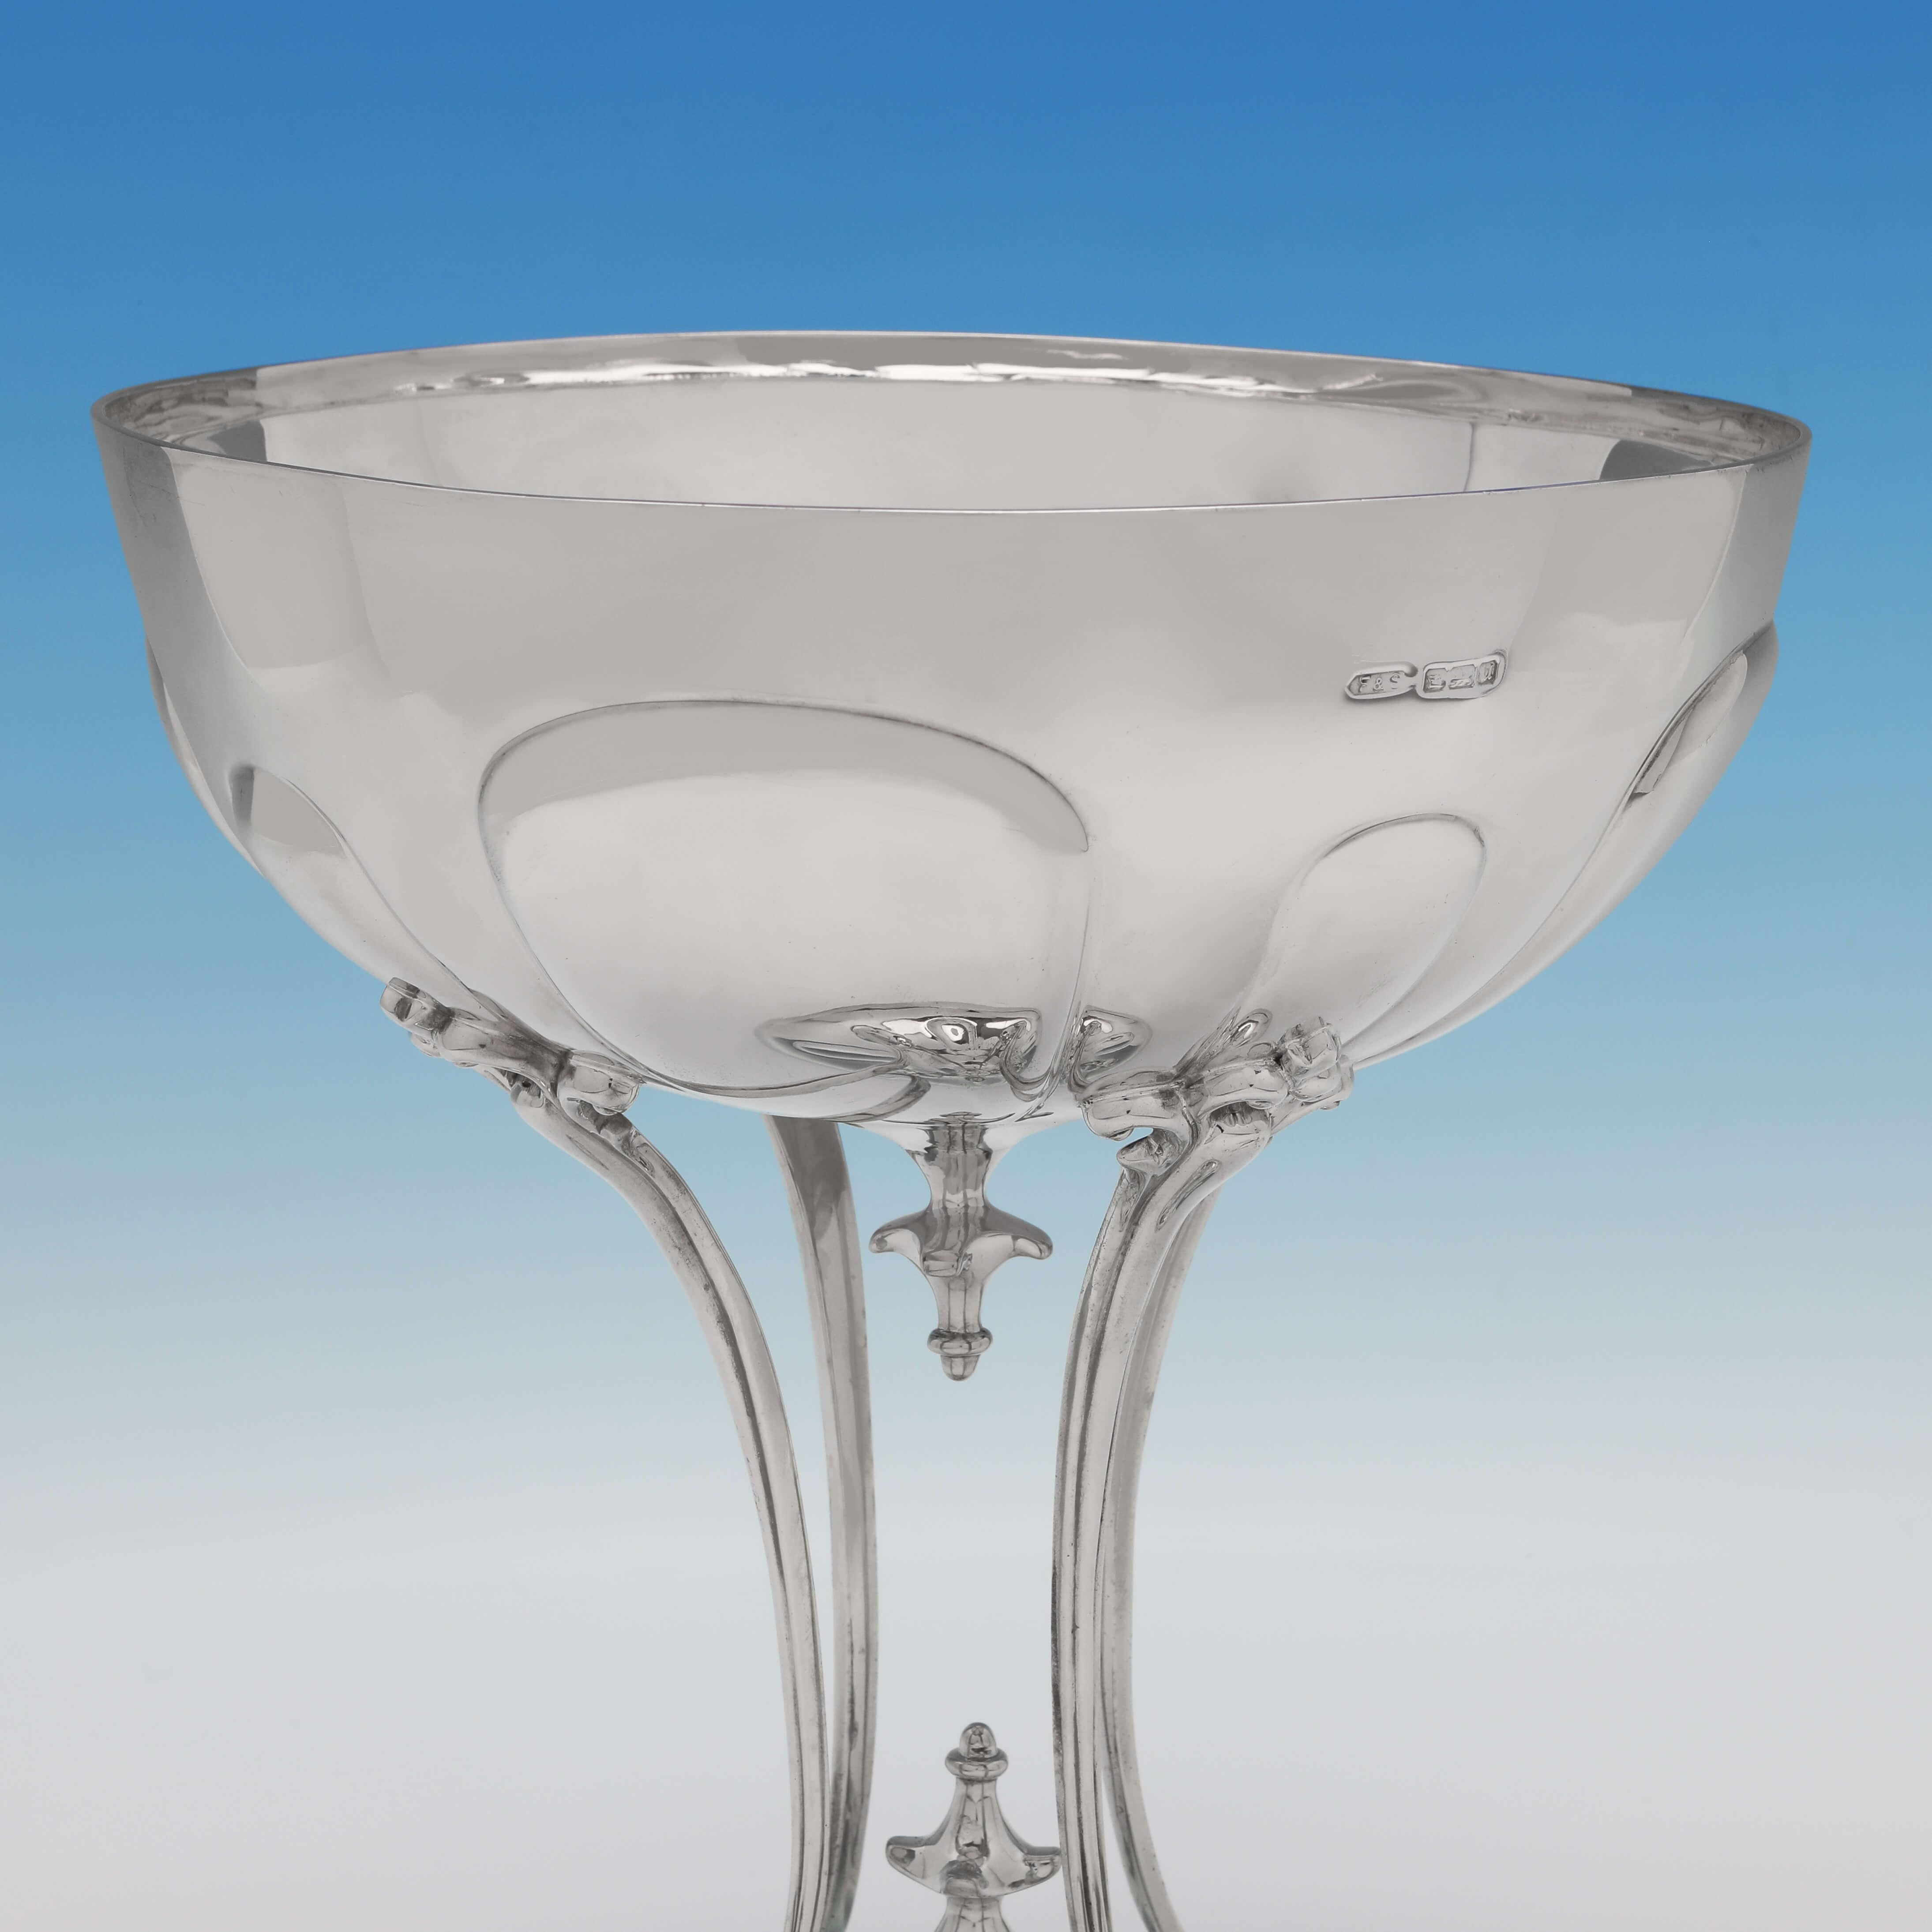 English Art Nouveau Antique Sterling Silver Trophy or Centrepiece, Sheffield, 1912